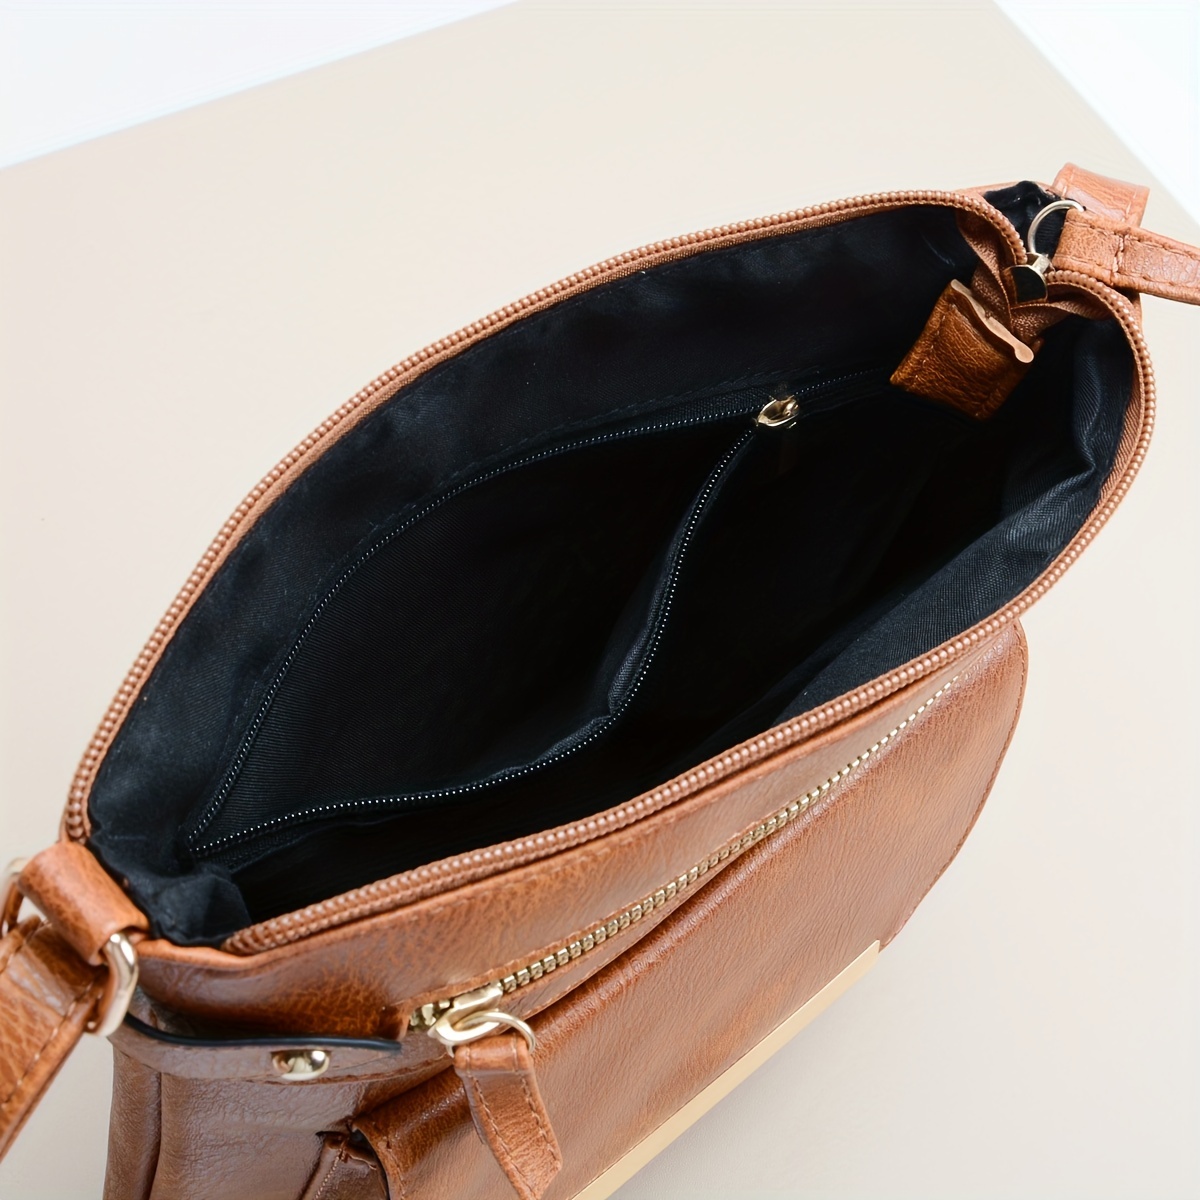 simple zipper crossbody bag pu leather textured bag purse classic versatile fashion shoulder bag